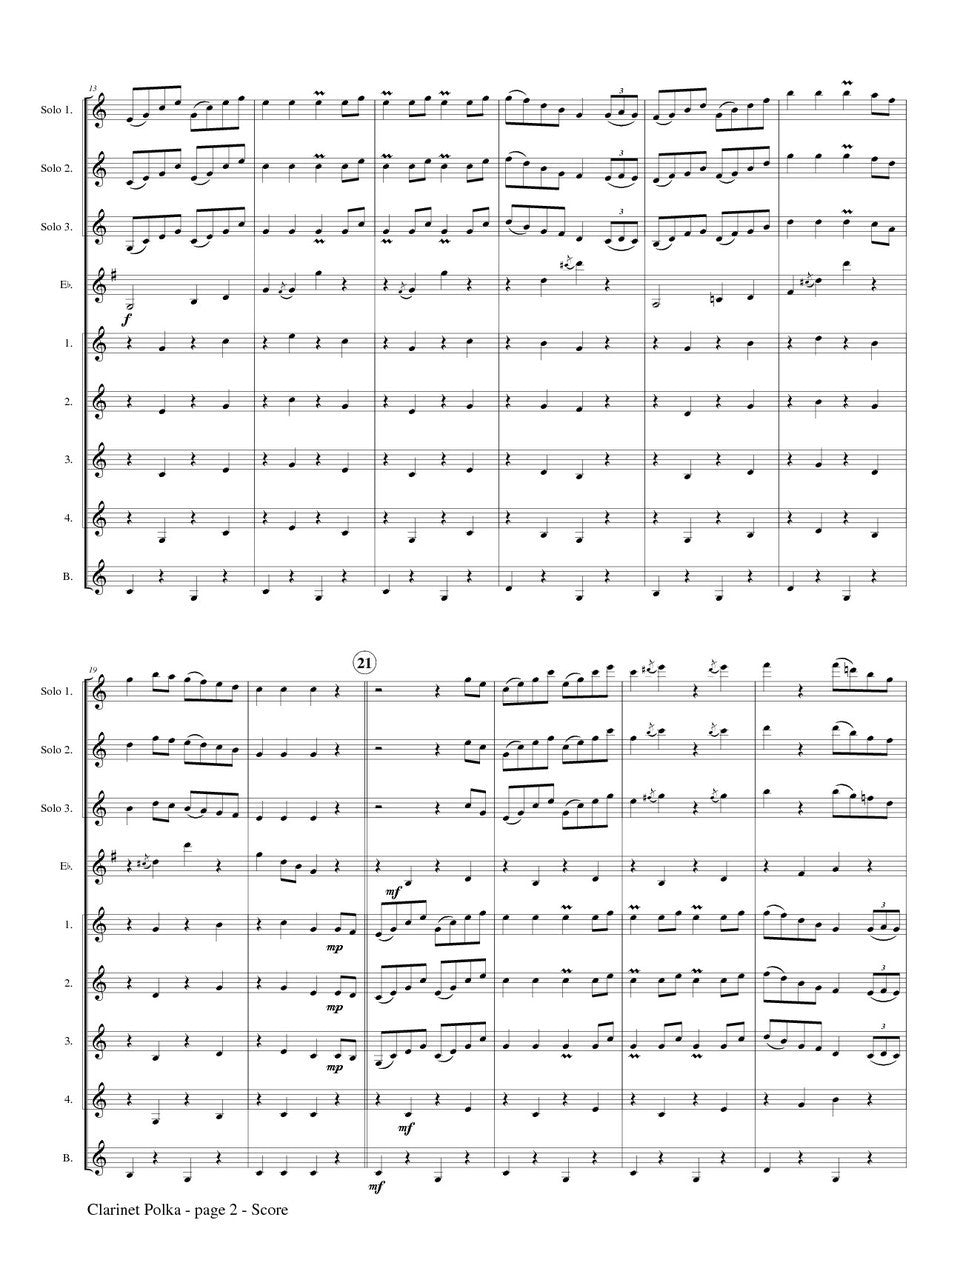 Johnston - Clarinet Polka